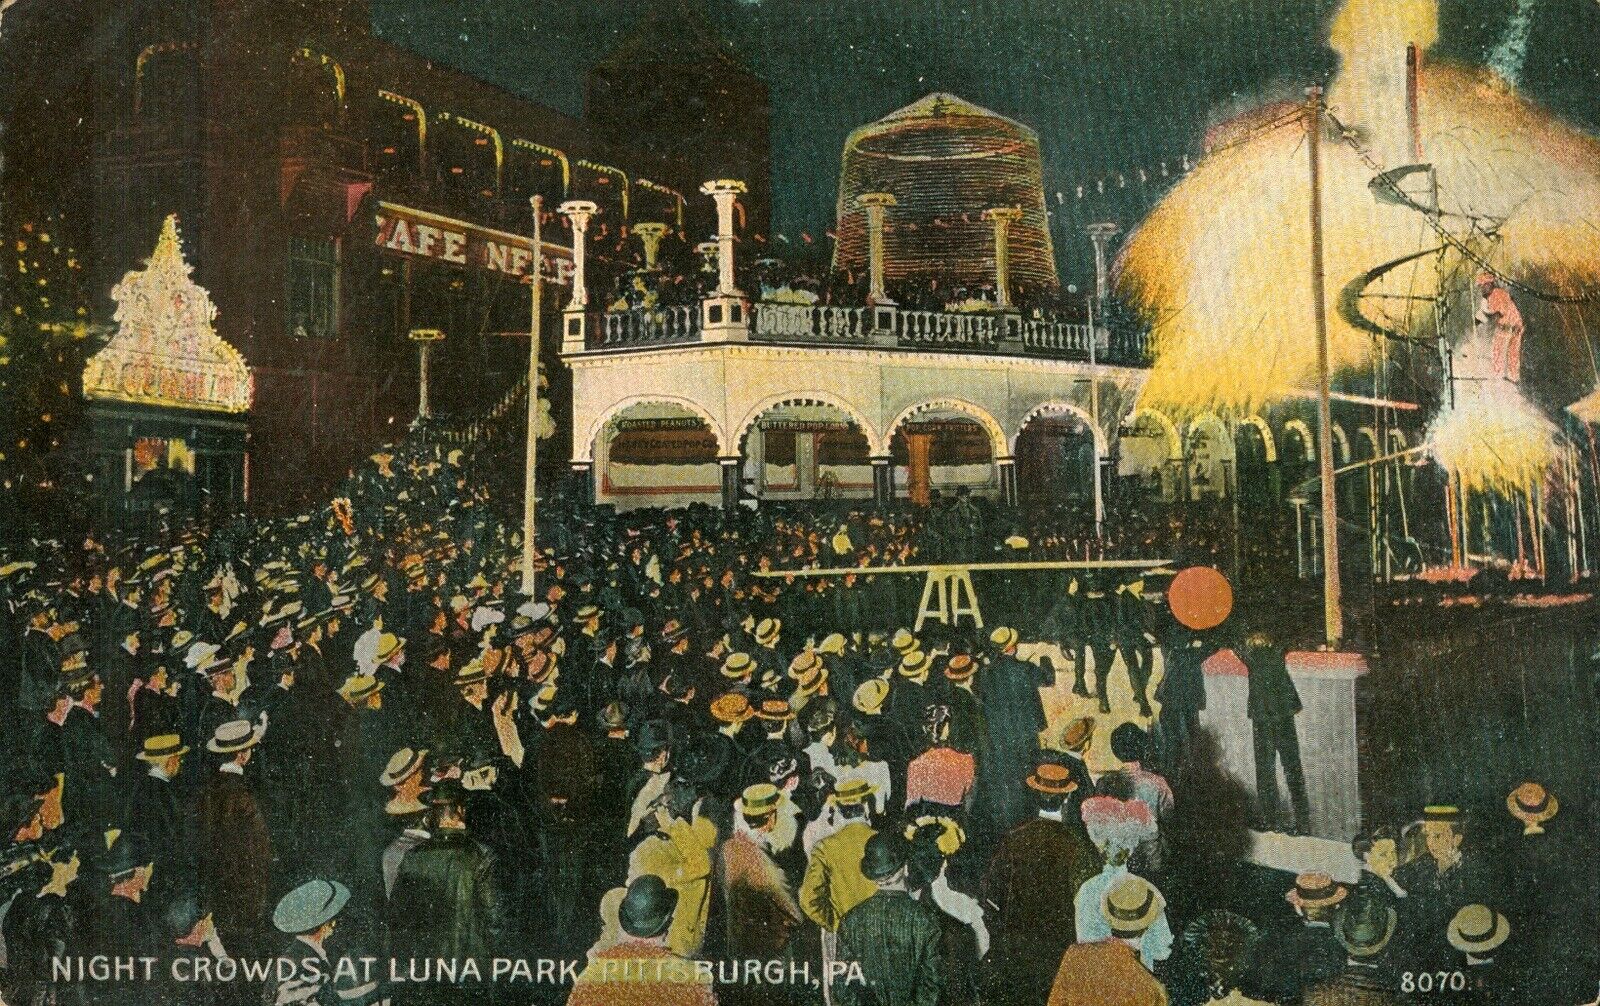 ANTIQUE c1907-1915 POSTCARD, Night Crowds at Luna Park, PITTSBURGH, PA 